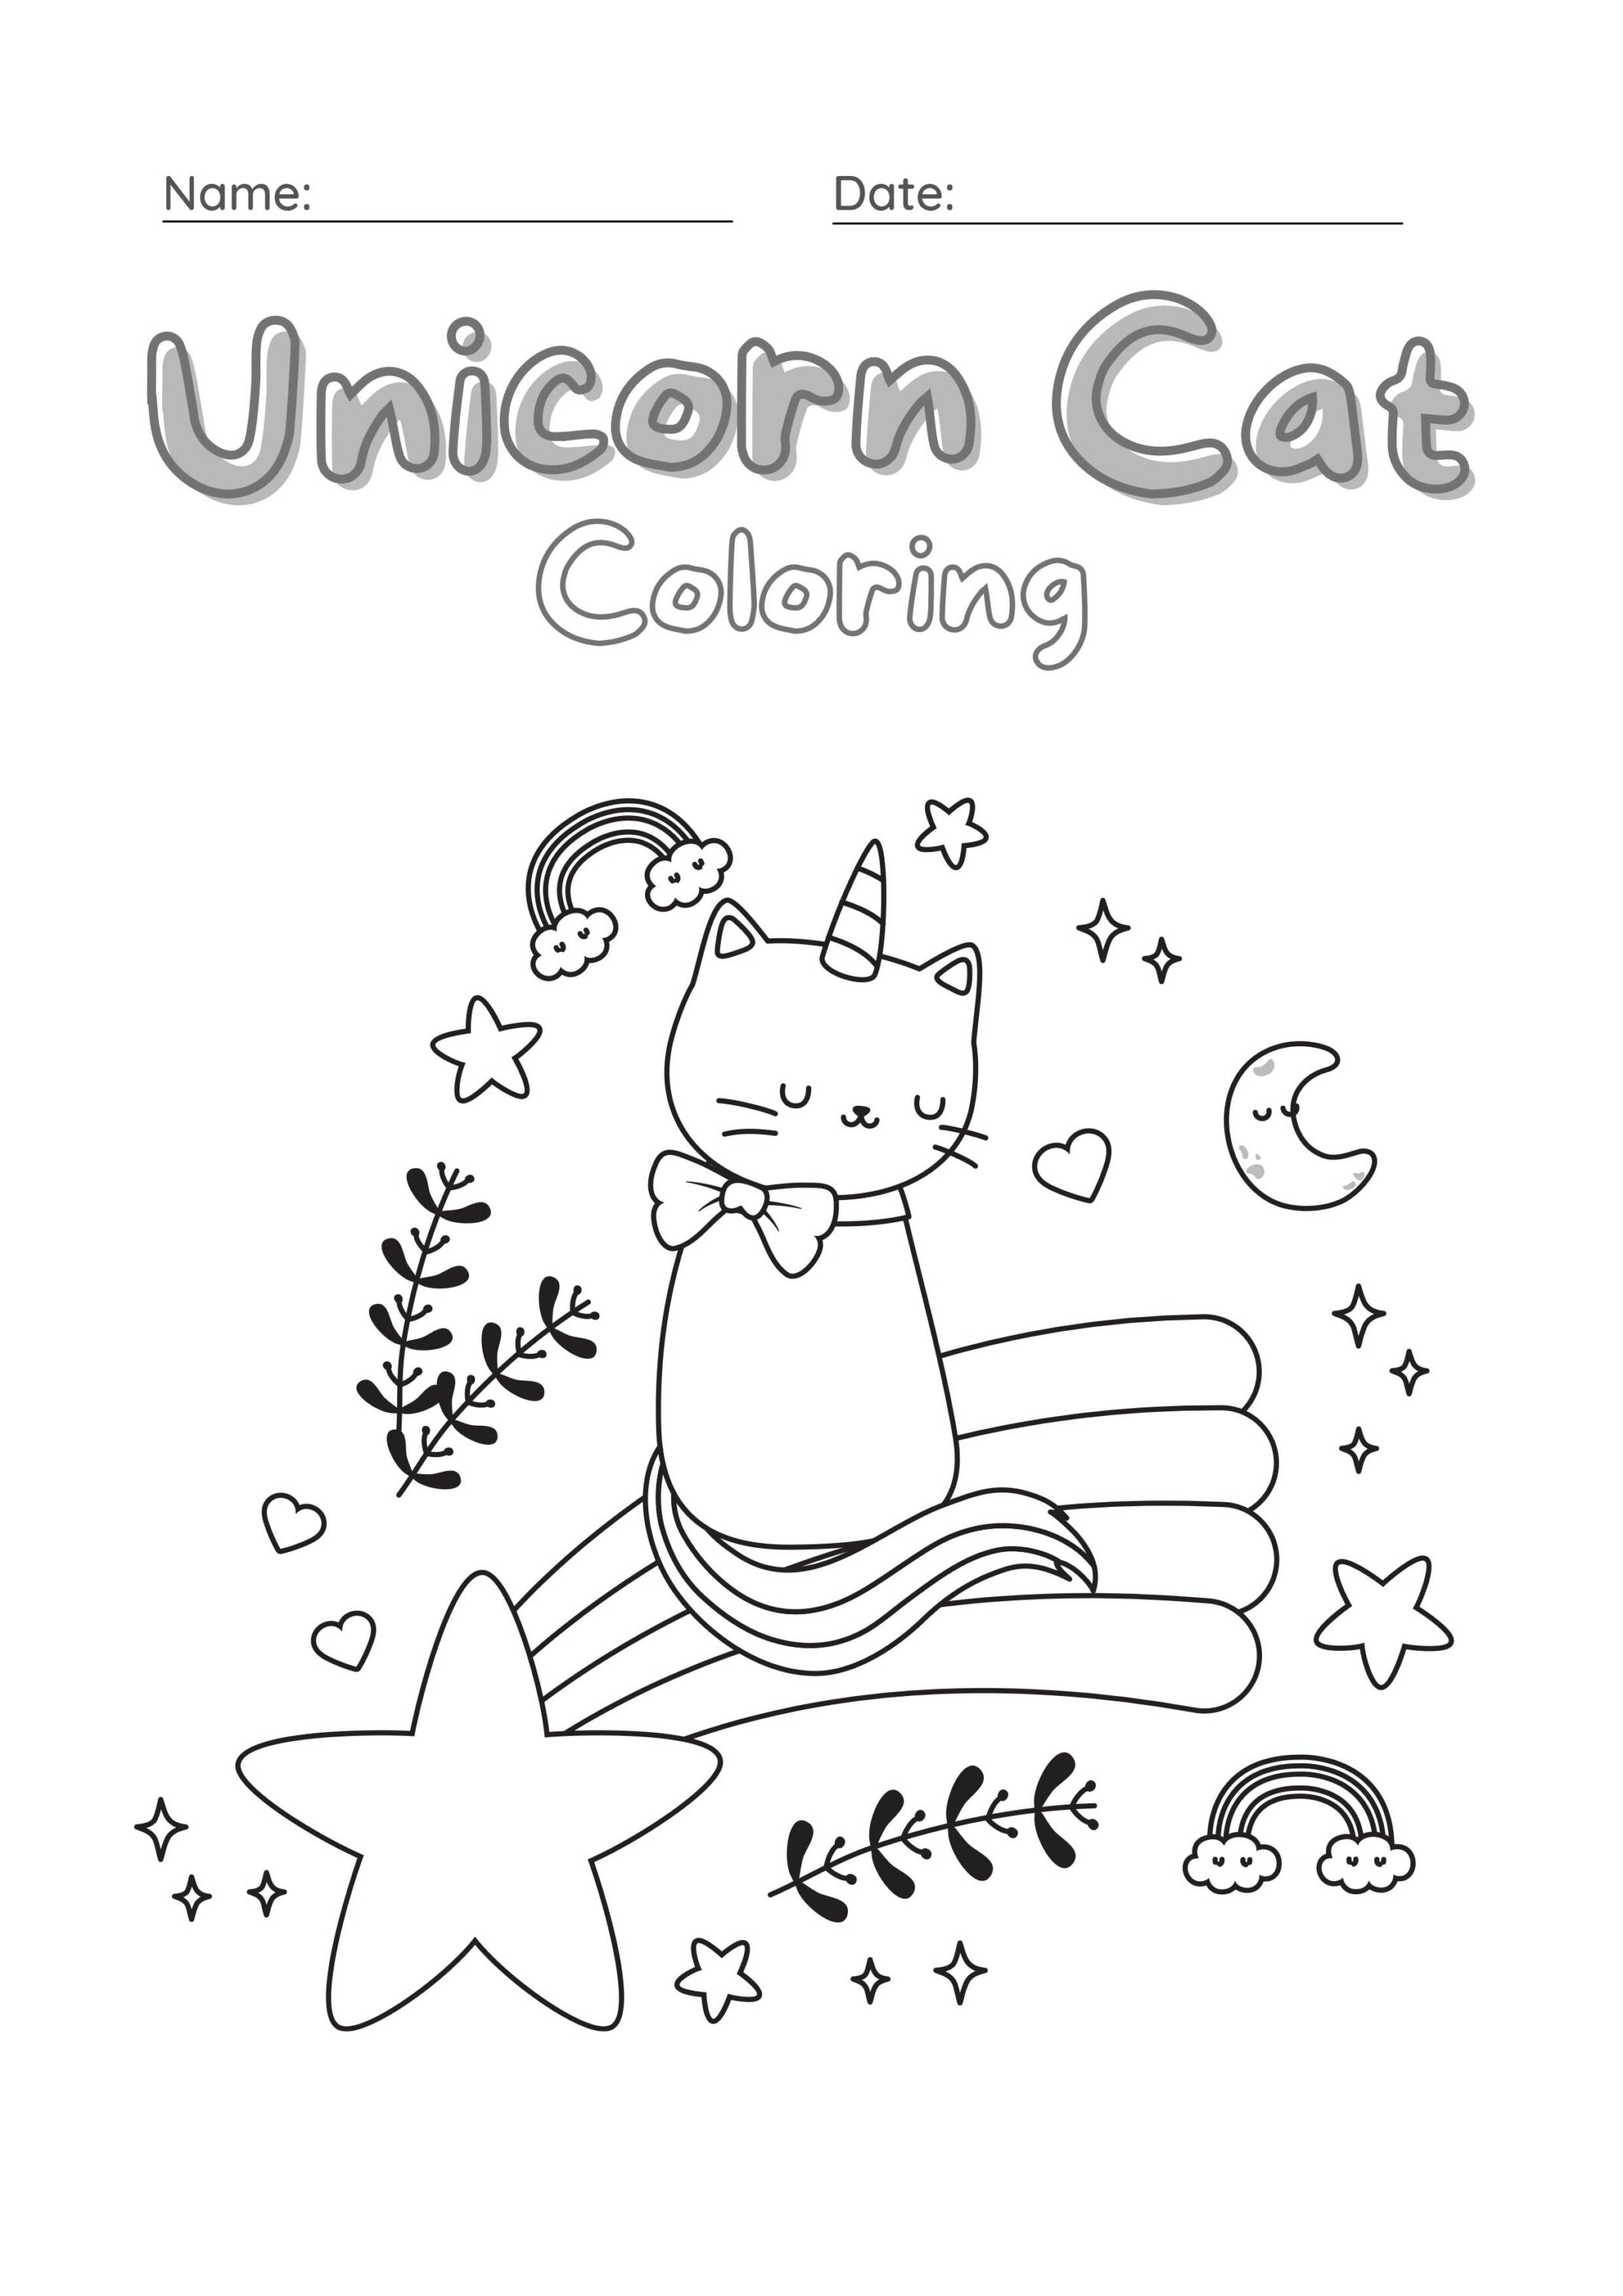 Unicorn Cat Coloring Worksheet Set 22